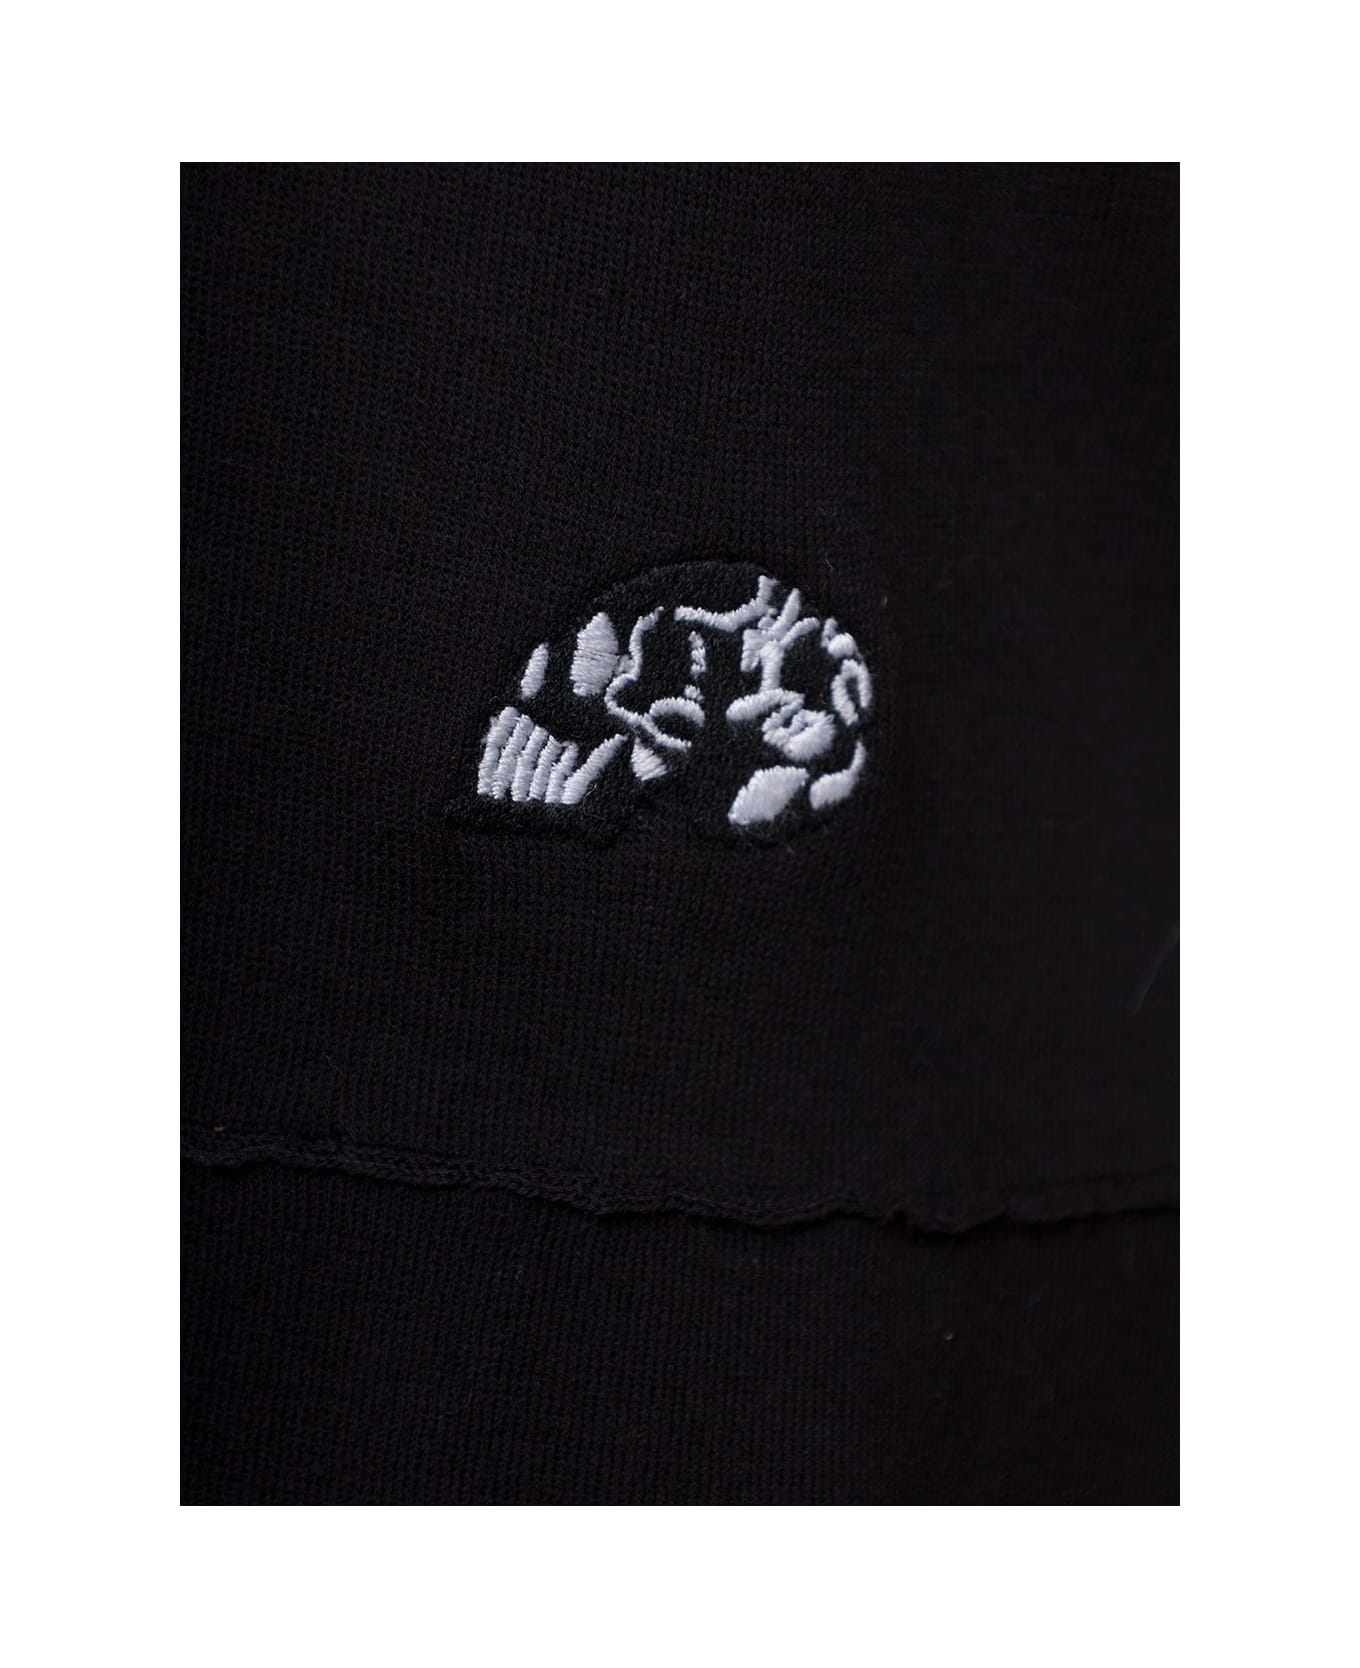 Gabriele Pasini Black Knit T-shirt With Logo Embroidery Woman - Blu